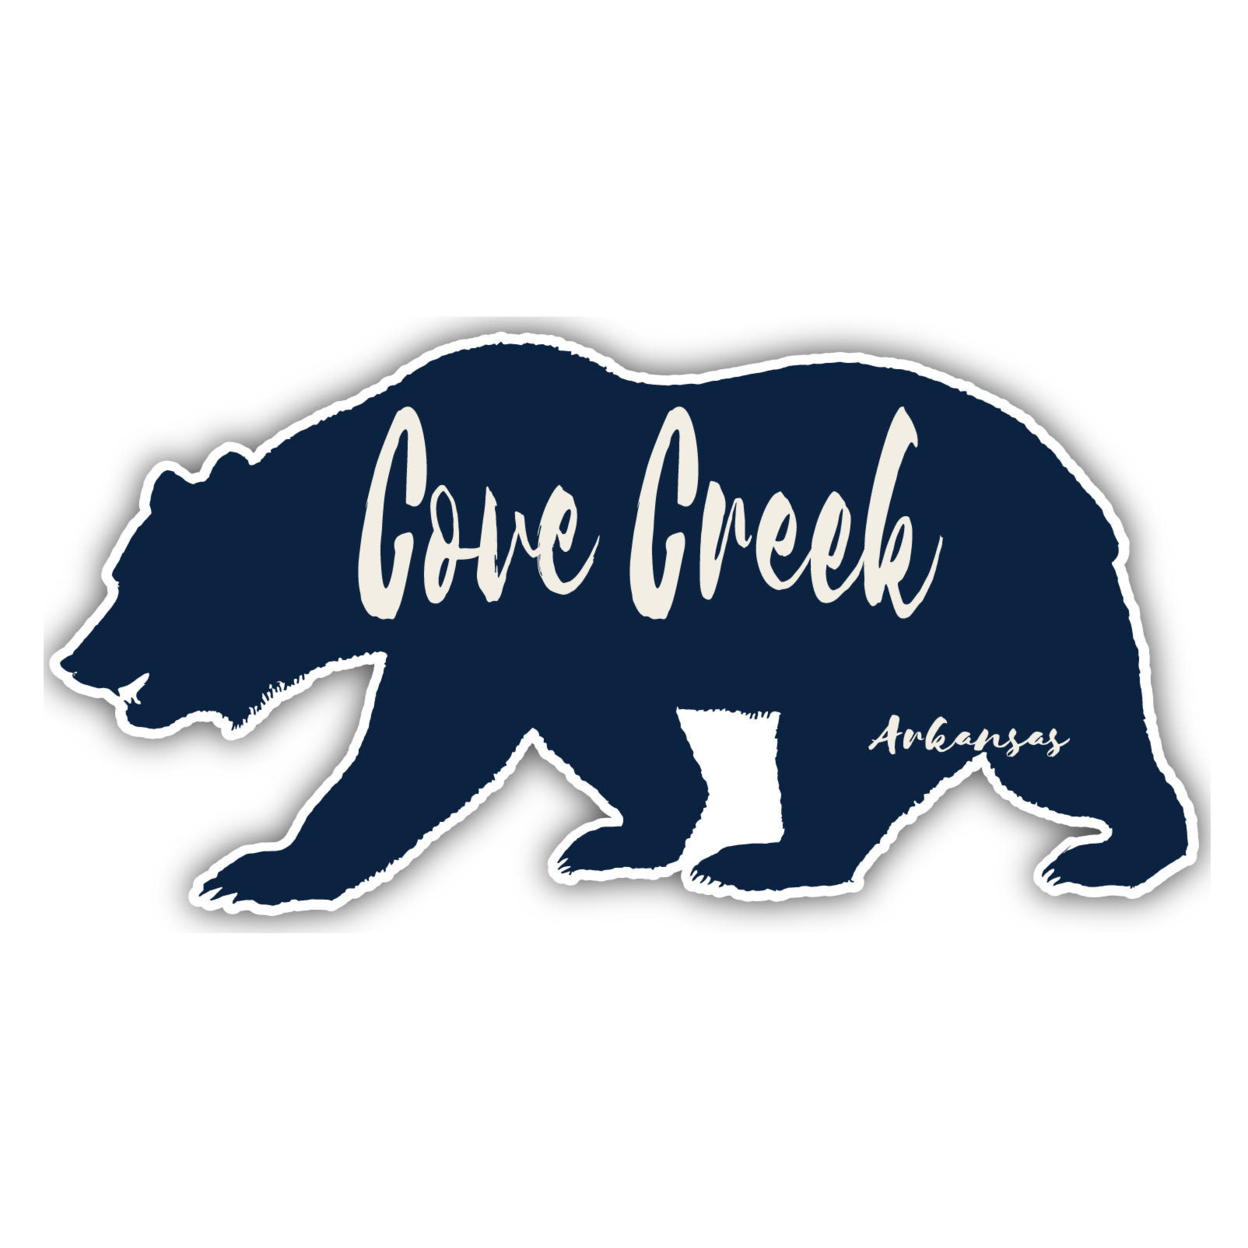 Cove Creek Arkansas Souvenir Decorative Stickers (Choose Theme And Size) - 4-Pack, 10-Inch, Bear